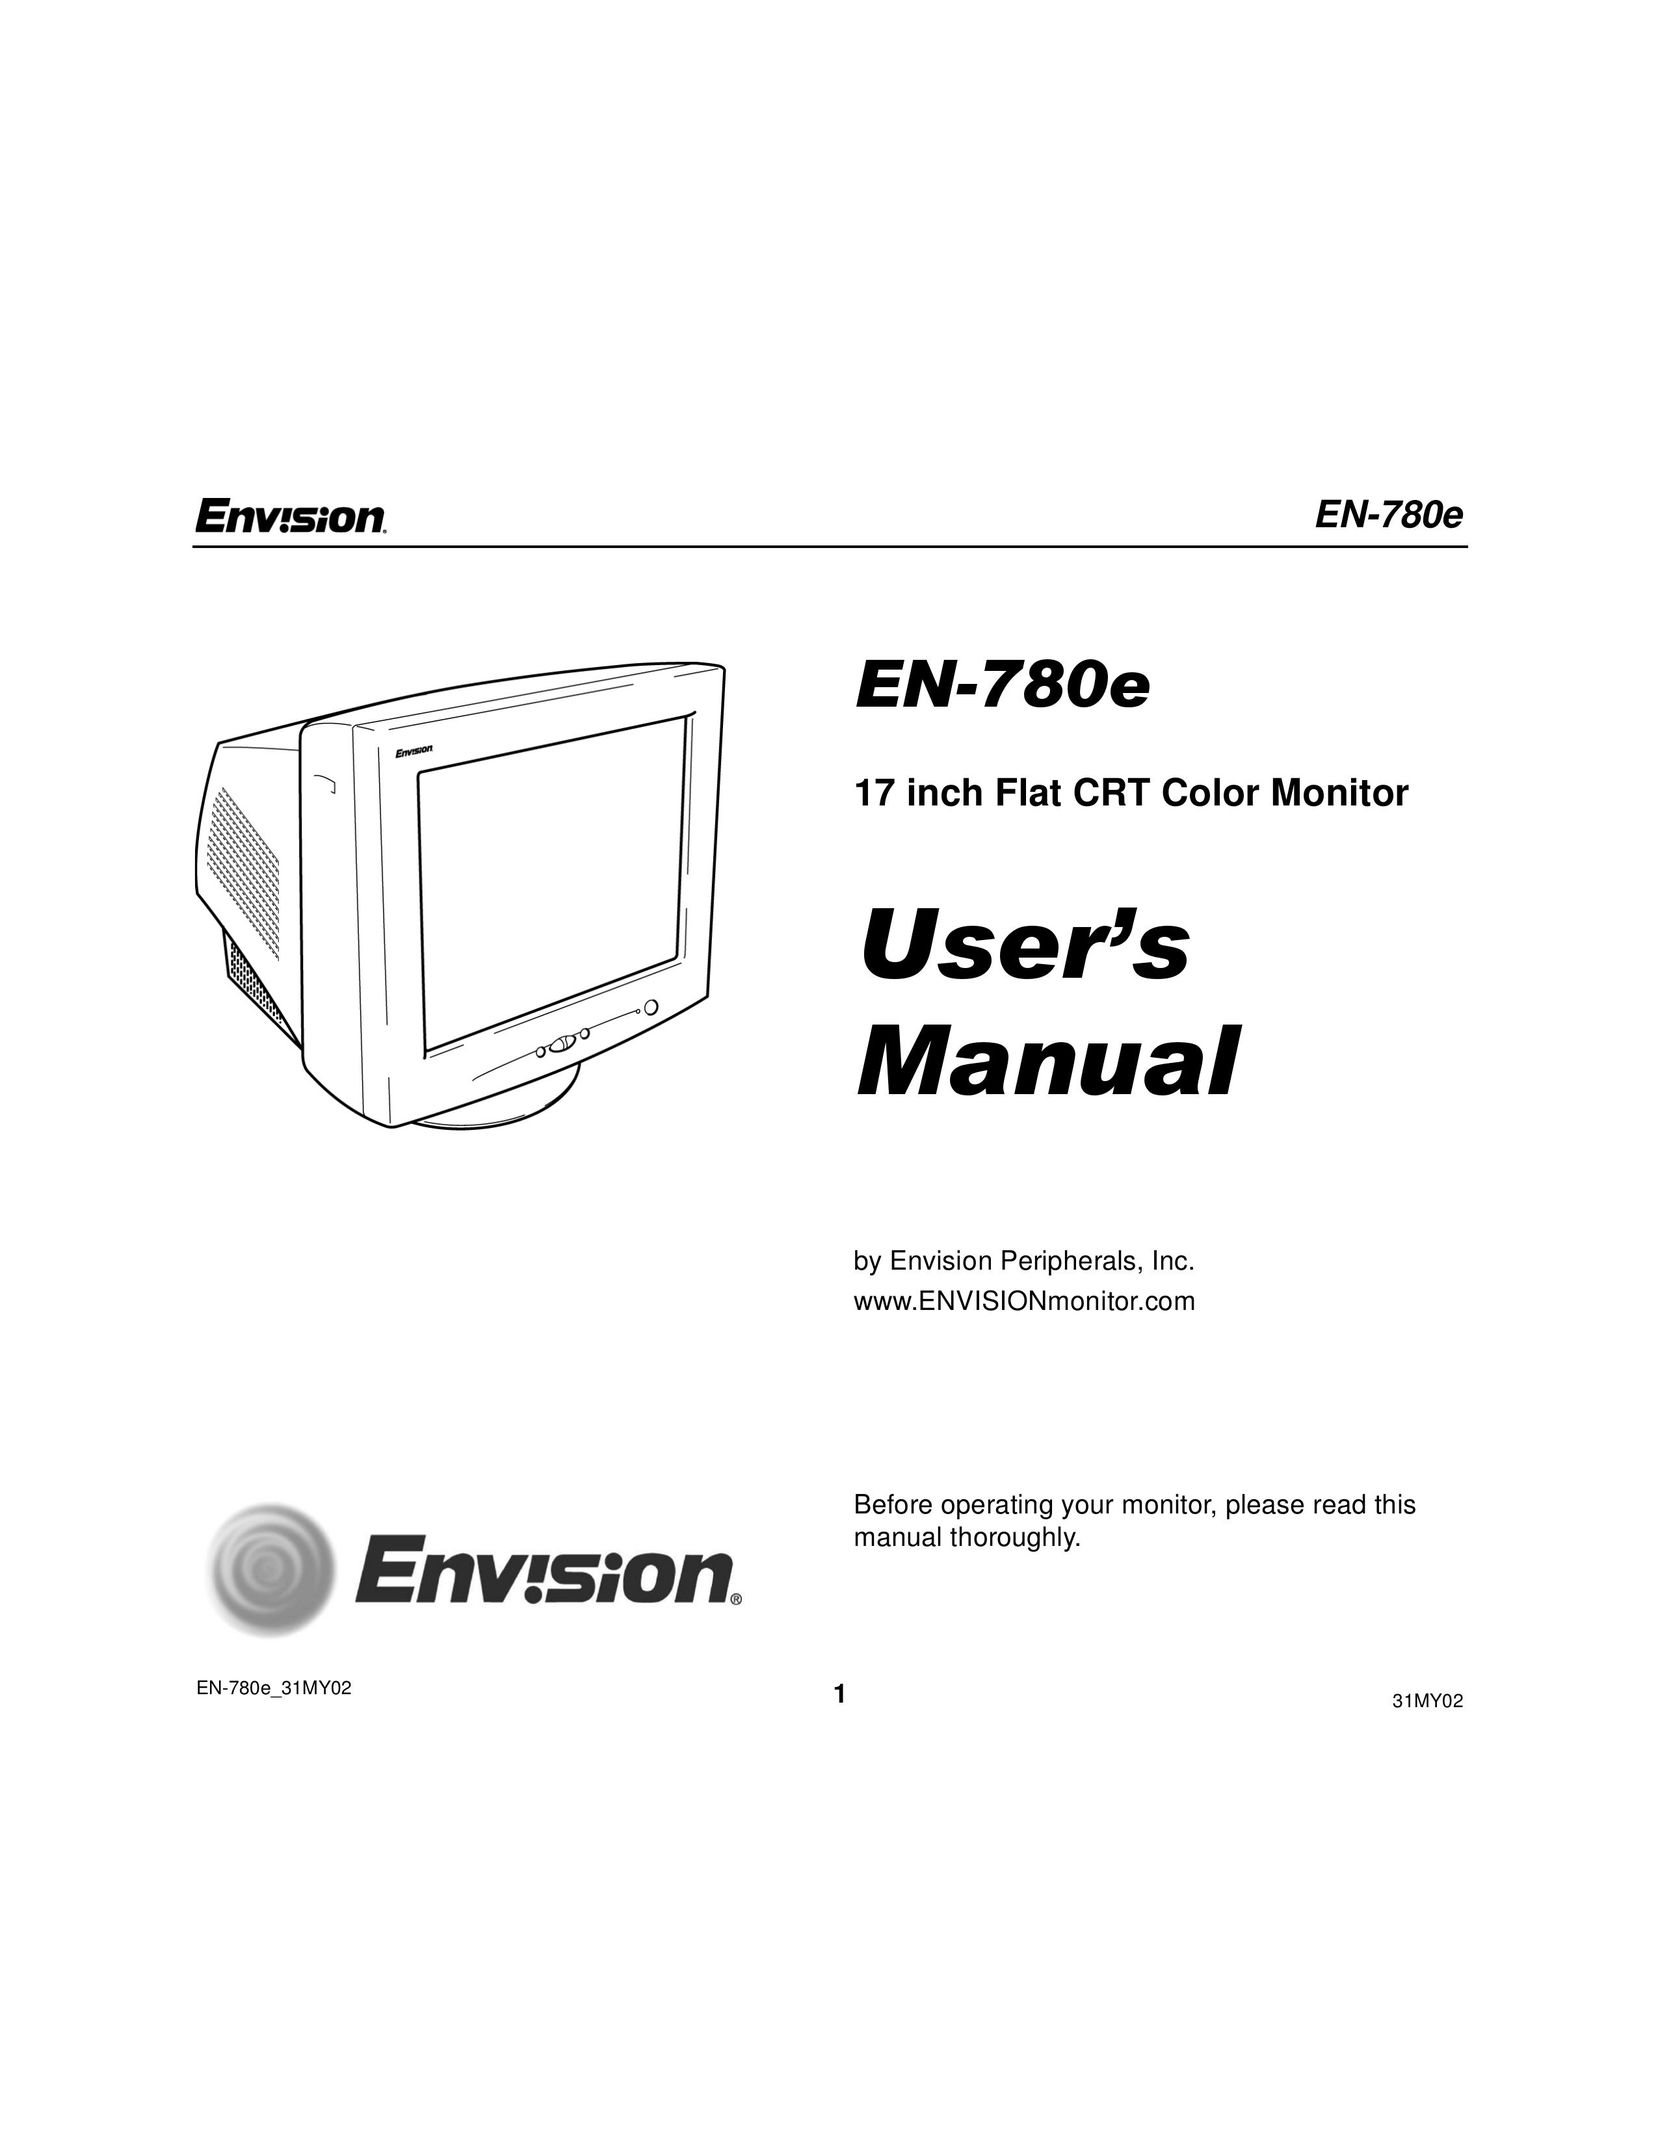 Envision Peripherals 31MY02 Computer Monitor User Manual